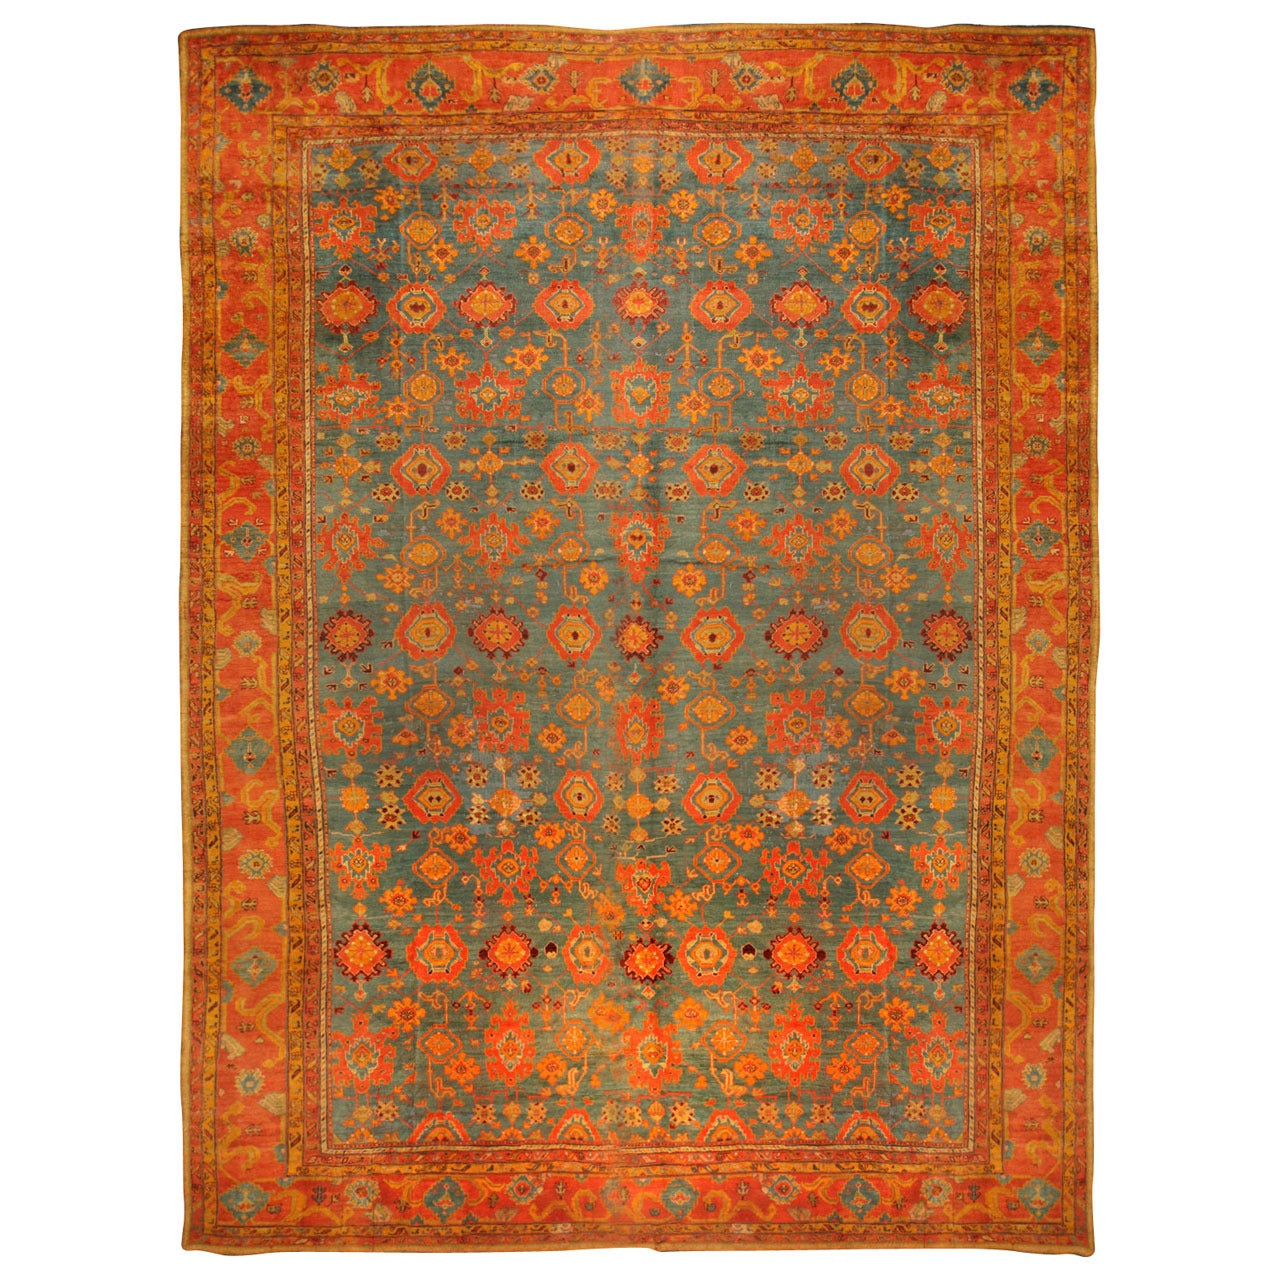 Antique Oversize 19th Century Turkish Oushak Carpet For Sale